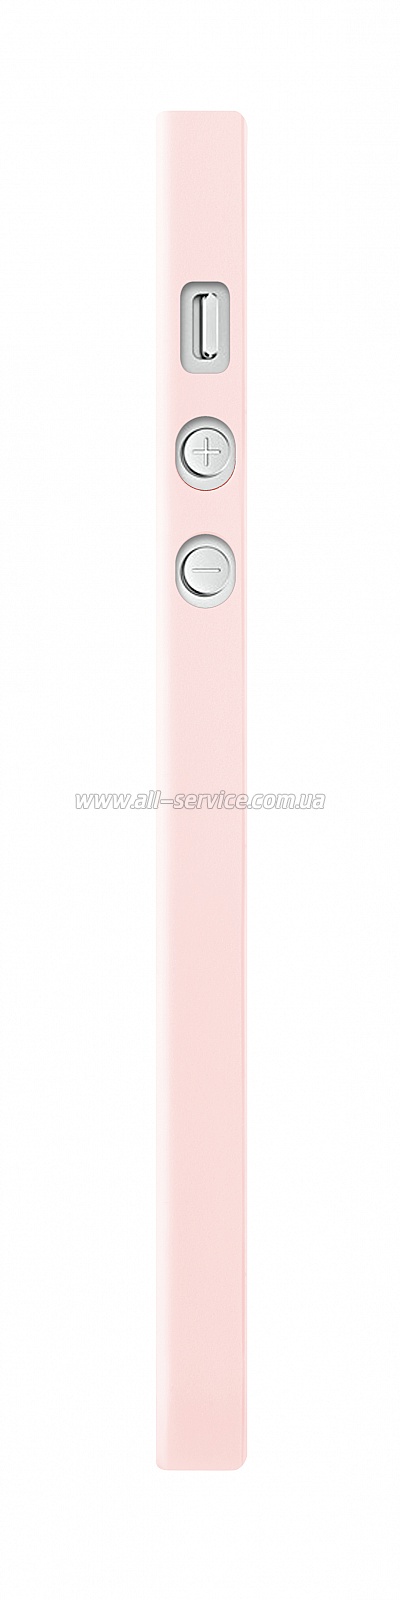  OZAKI O!coat-0.3+Canvas iPhone 5/5S Pink OC543PK